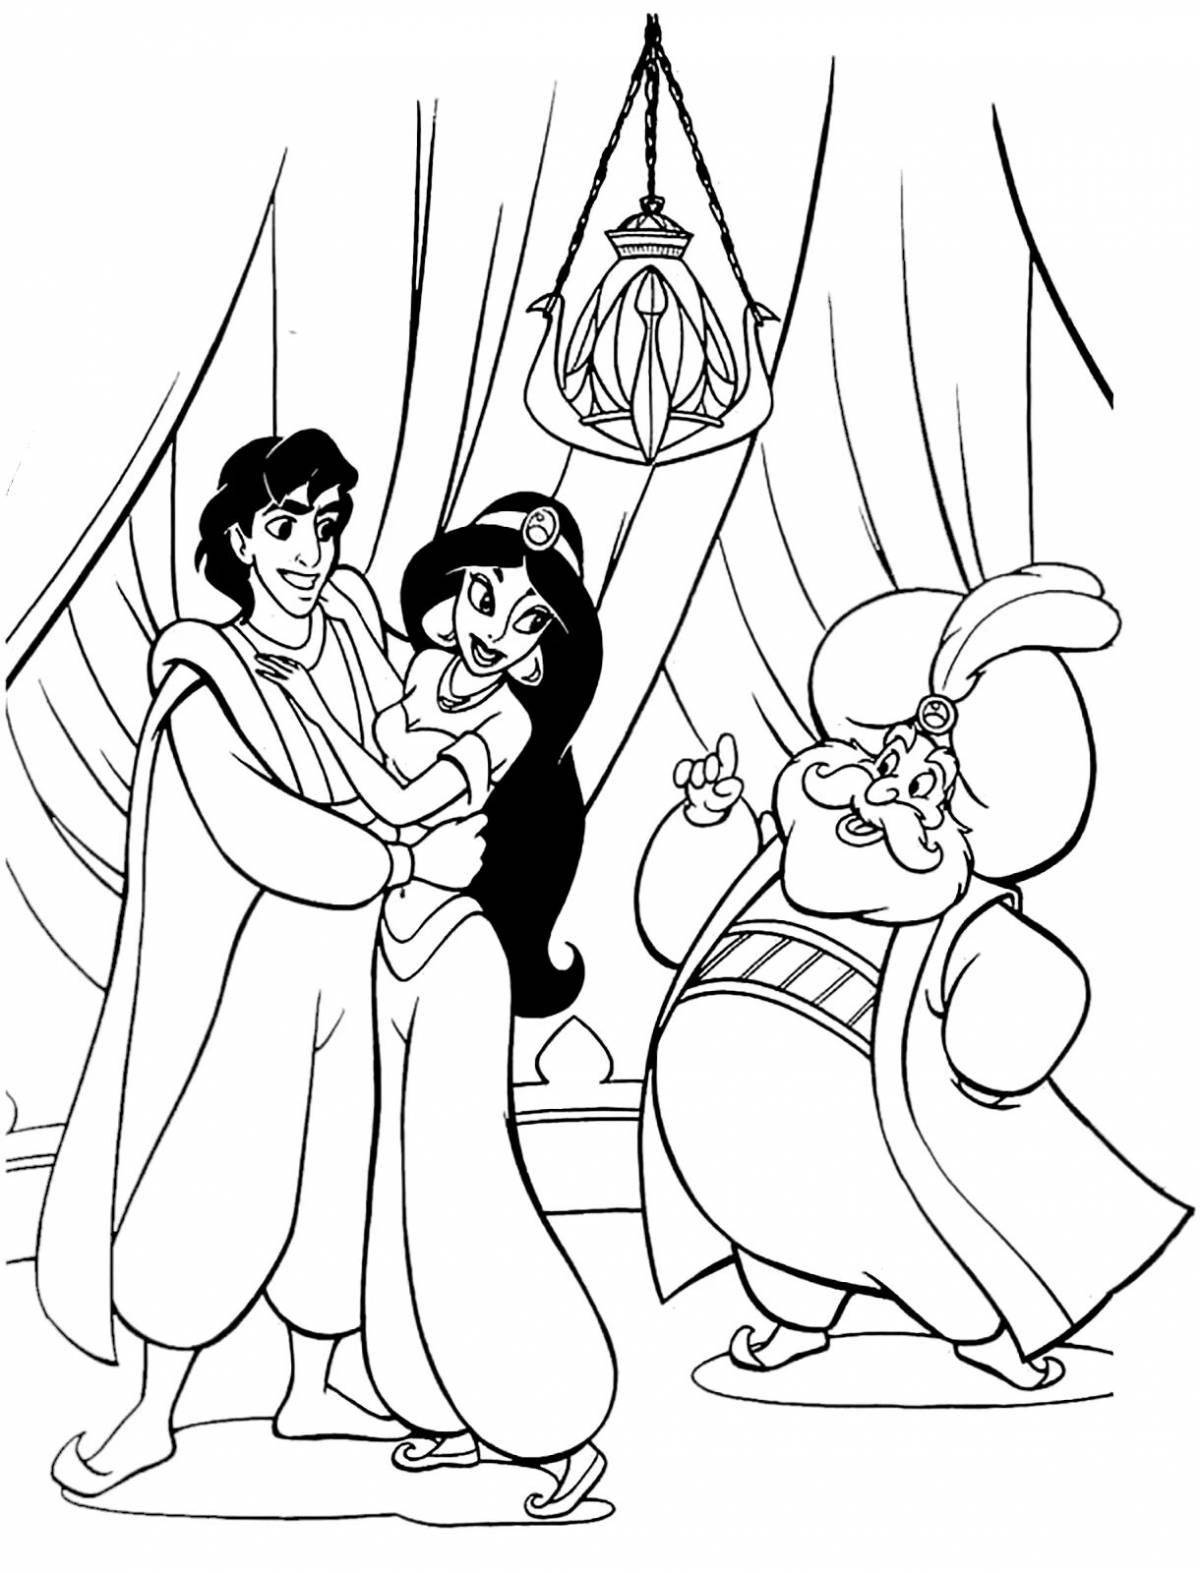 Merry Aladdin coloring book